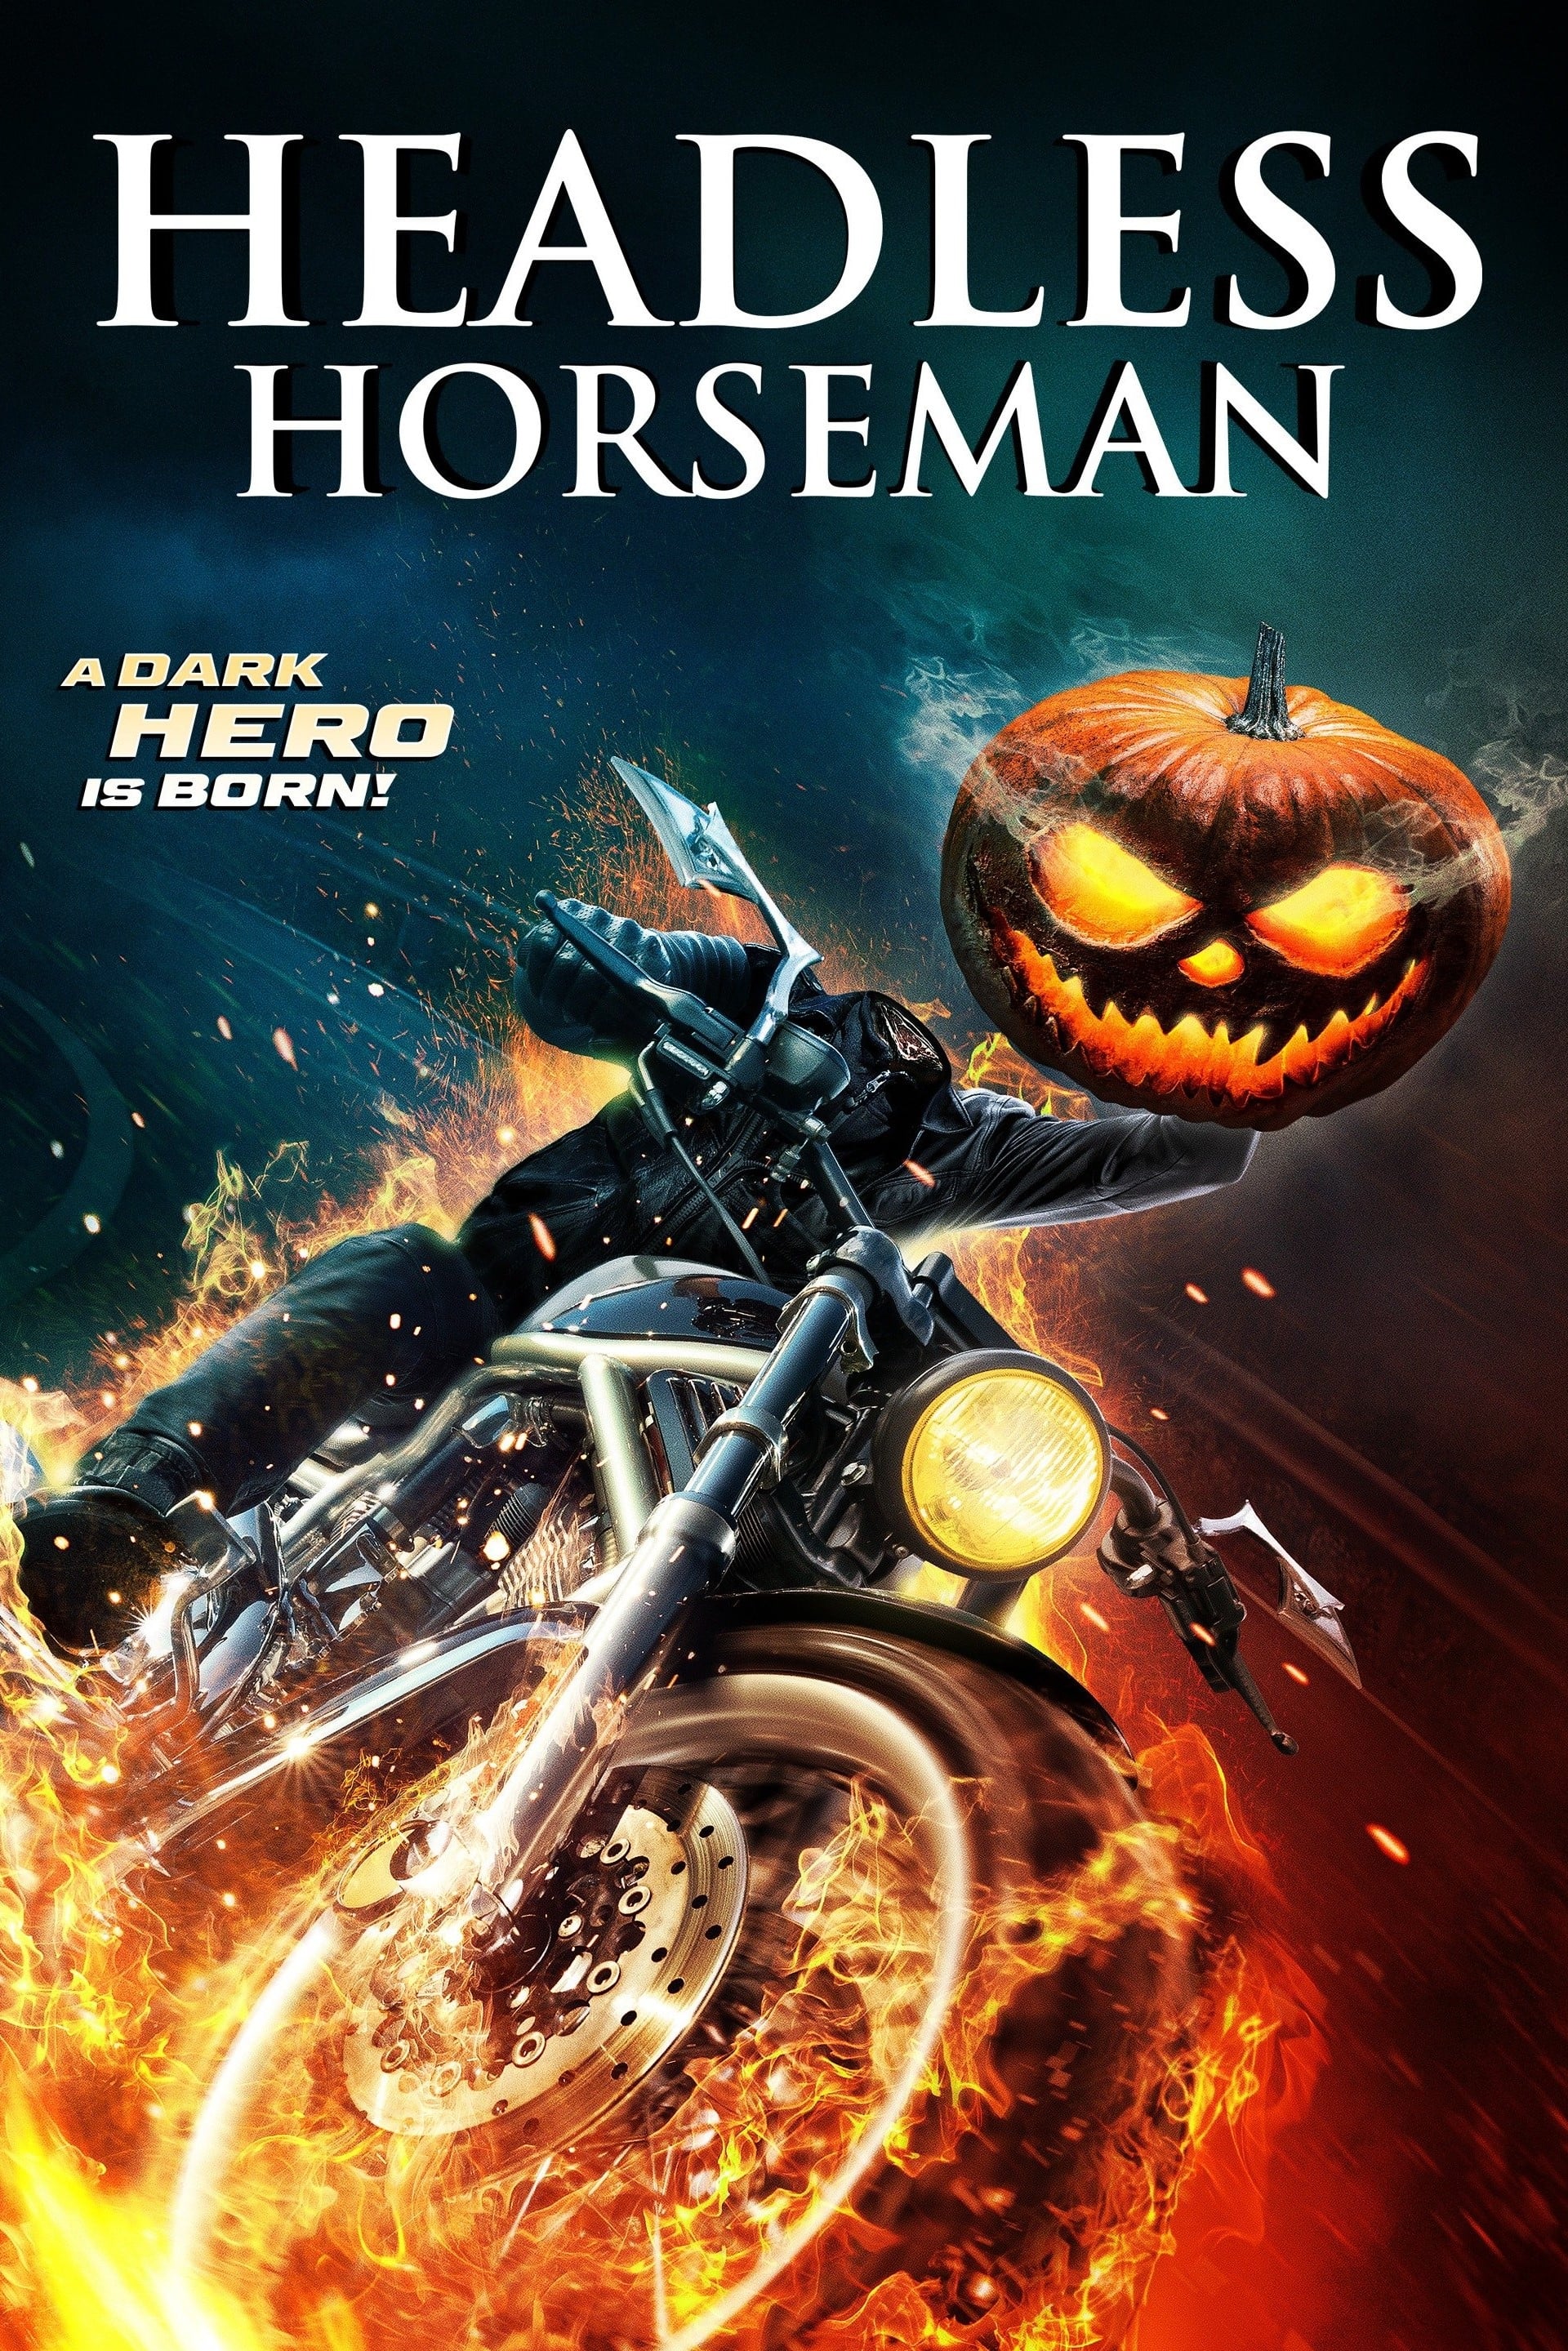 Headless Horseman film